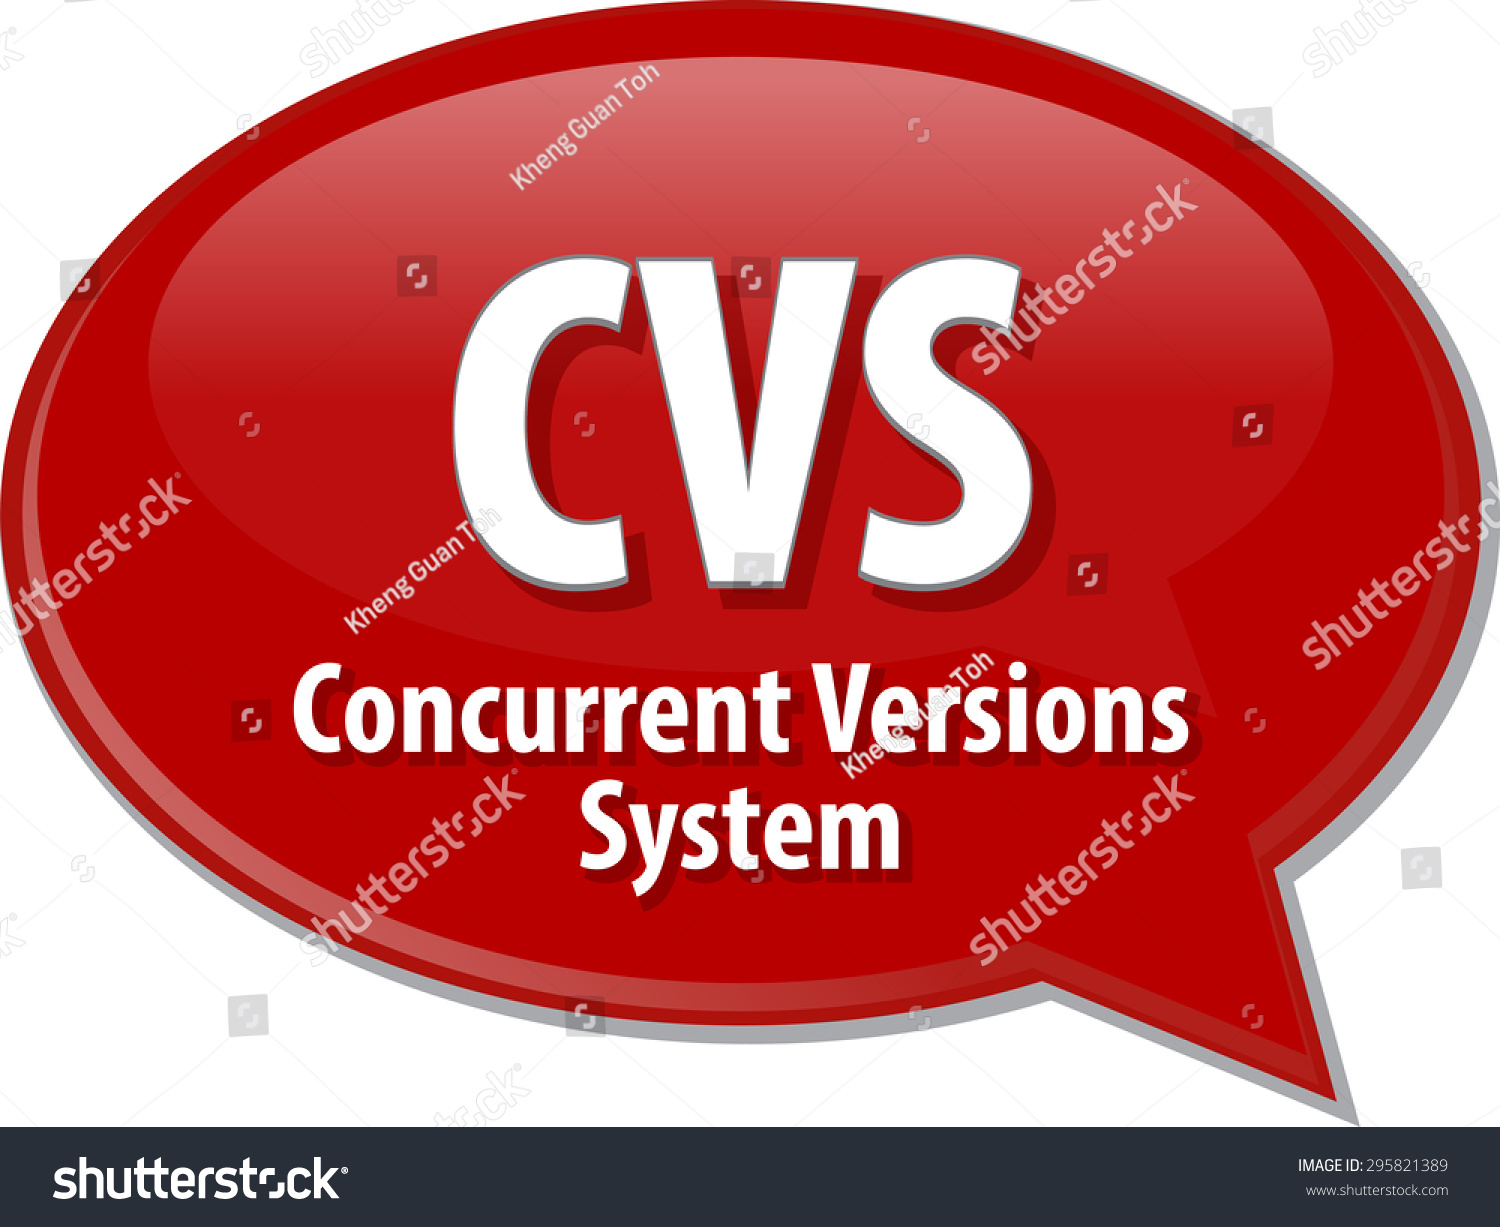 speech bubble illustration of information technology acronym abbreviation term definition cvs